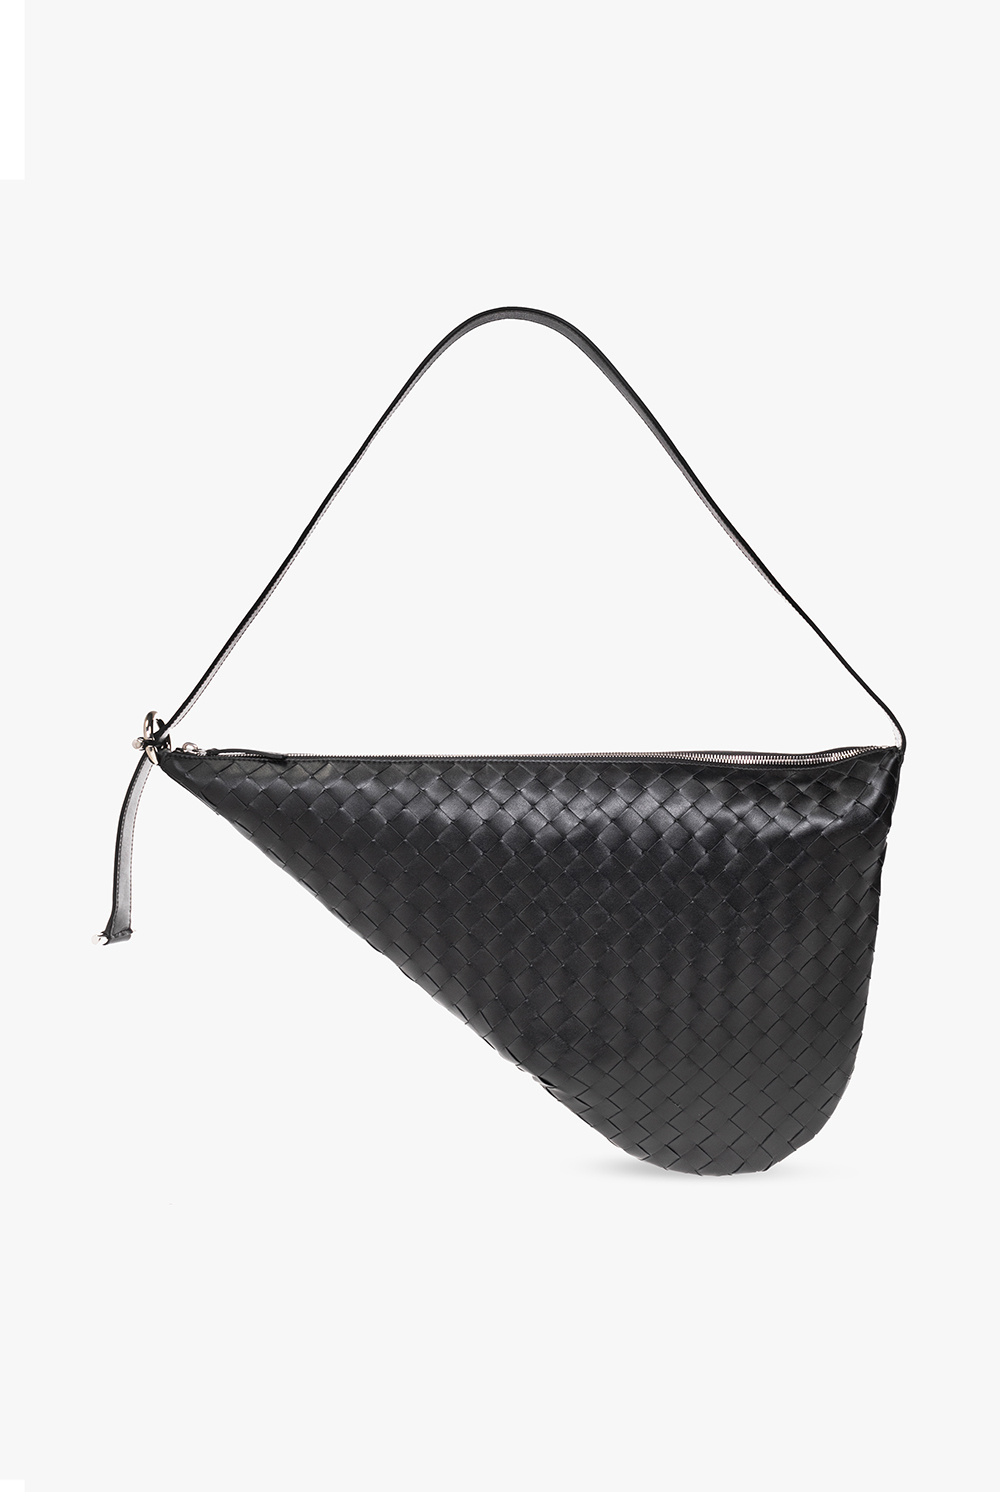 Bottega Veneta ‘Avenue’ shoulder bag